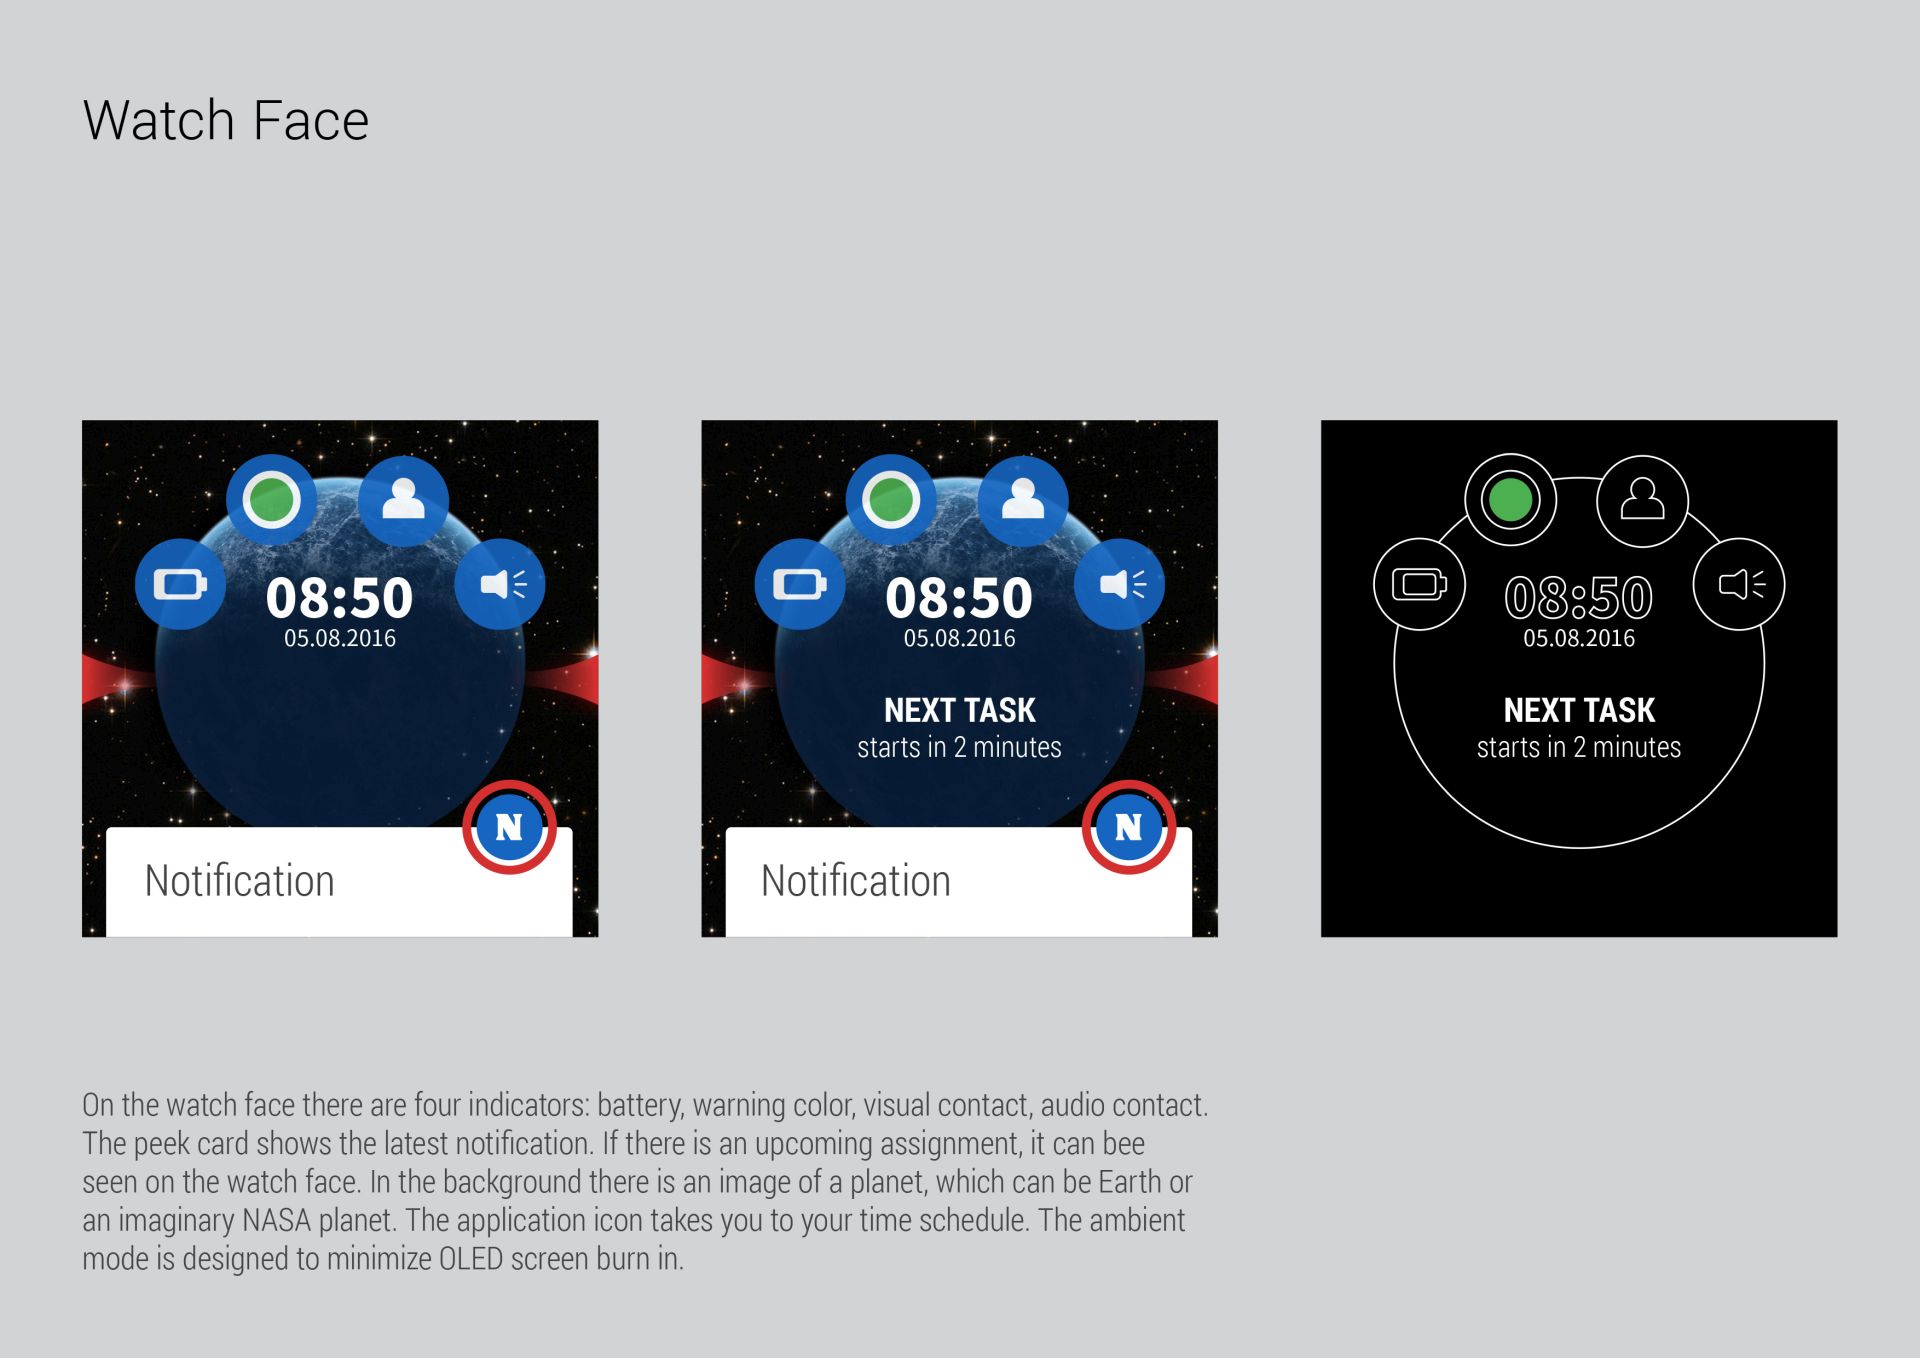 NASA android wear application watchface